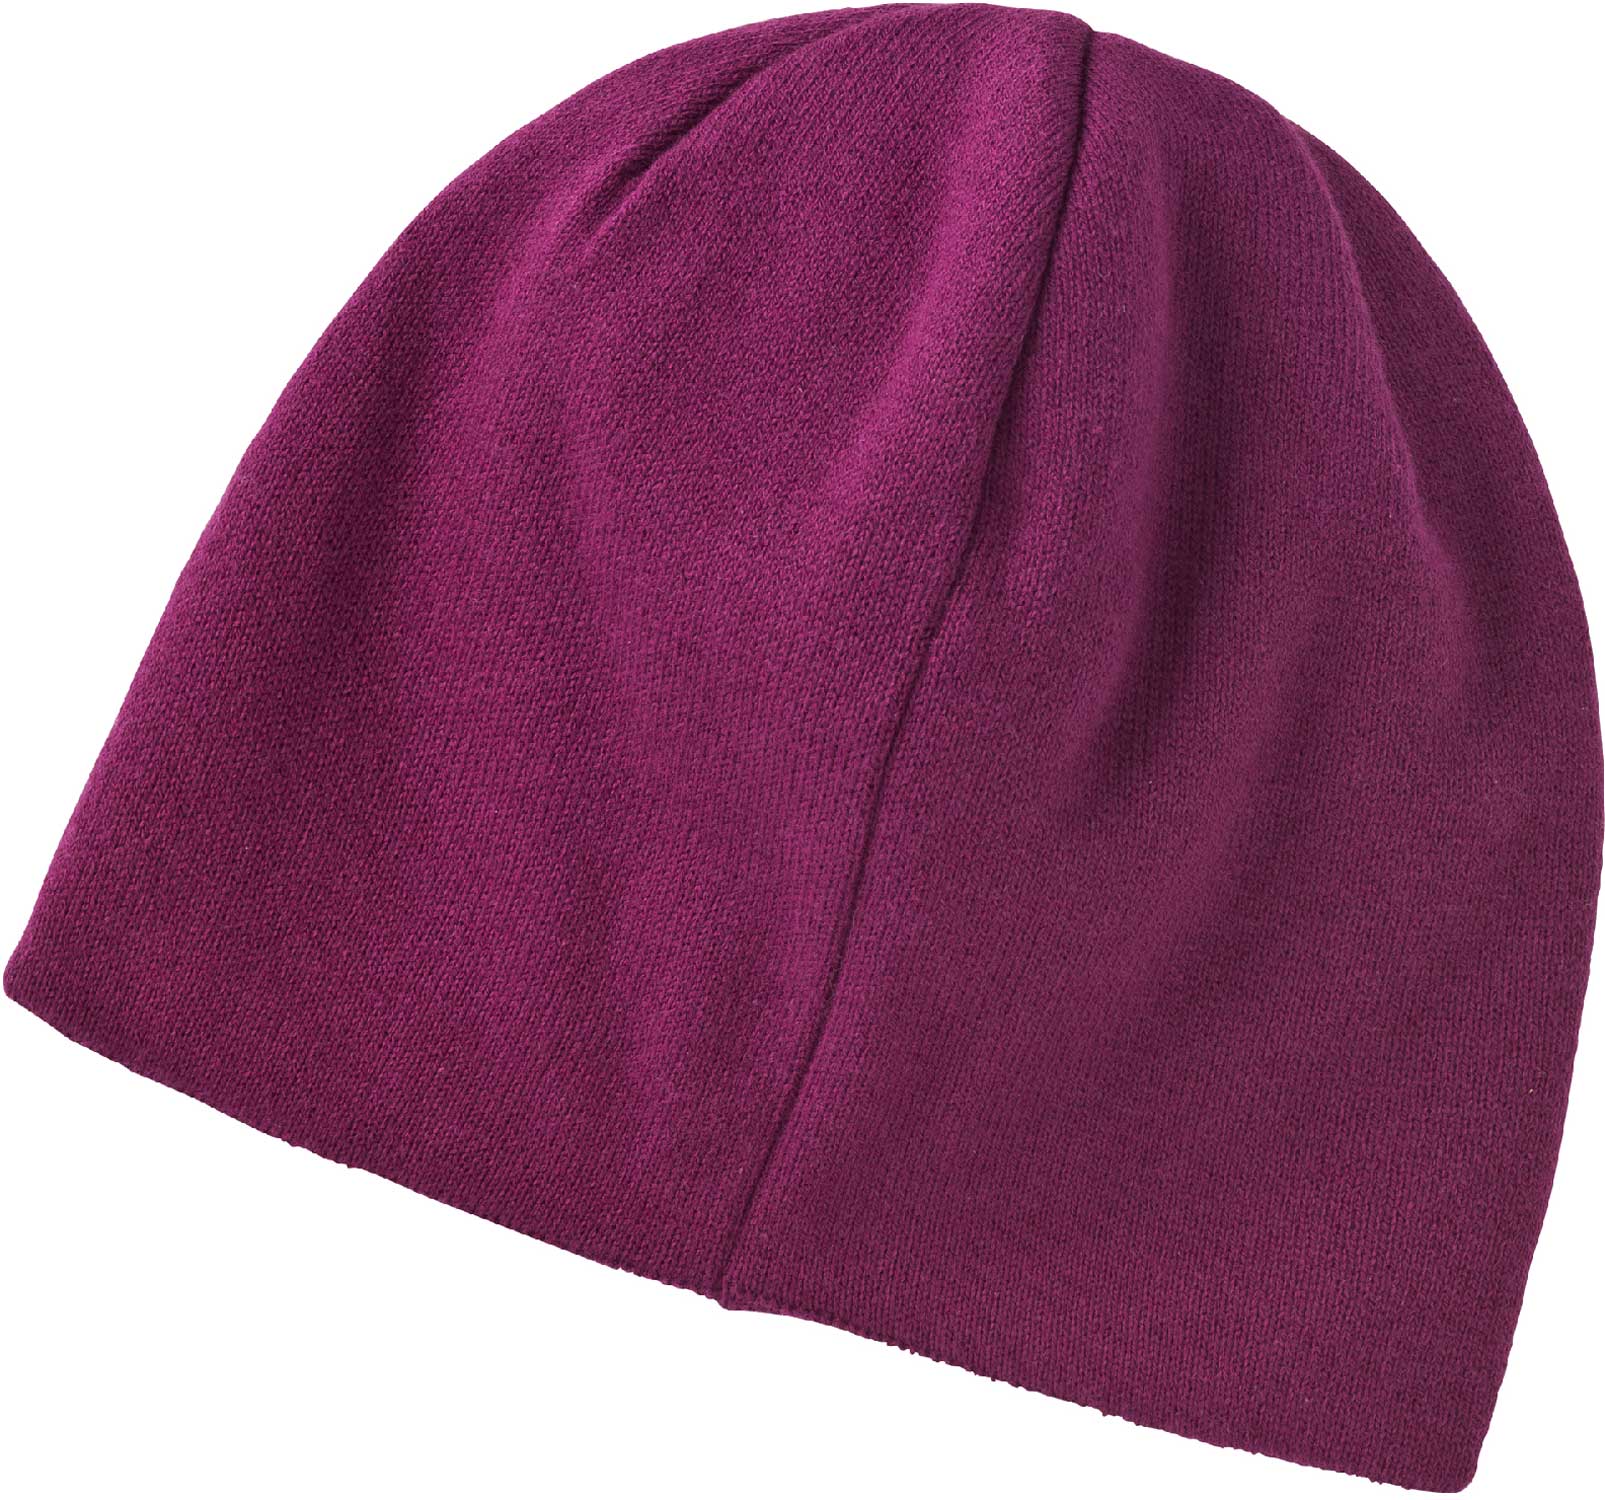 Stylish winter hat